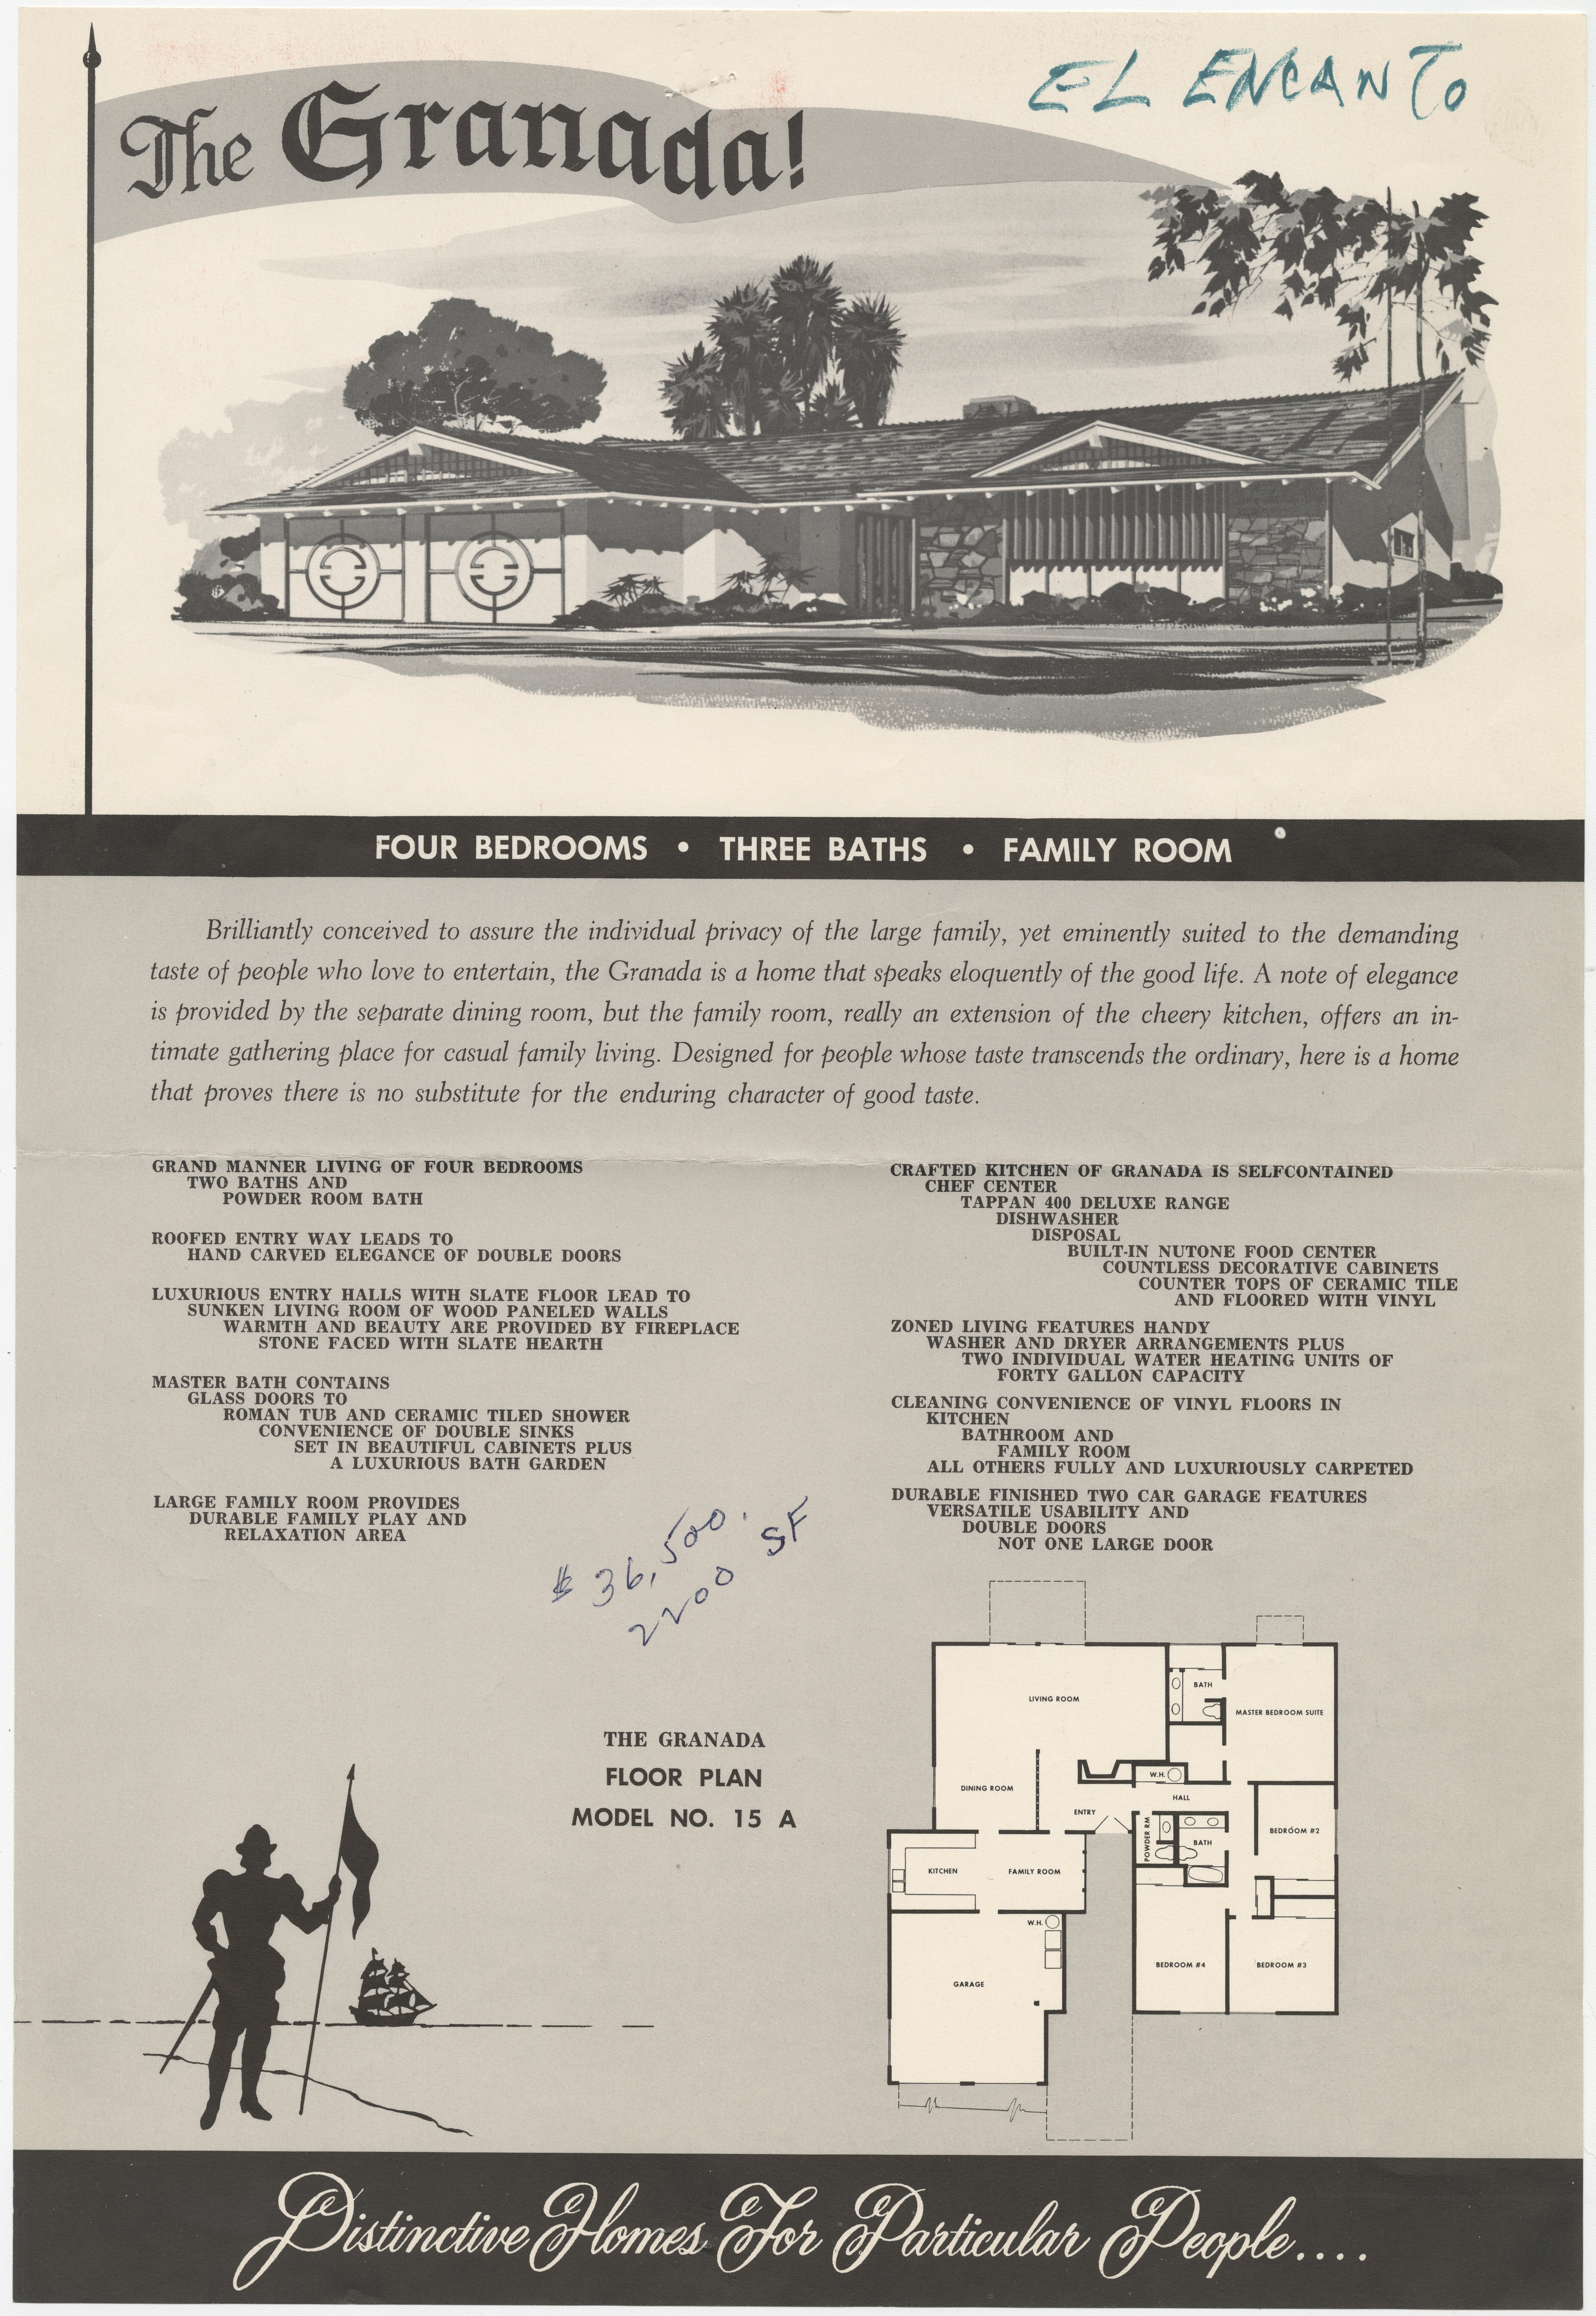 Sales material for the Granada model home in the El Encanto development, Las Vegas, Nevada, 1967-1969, side 1